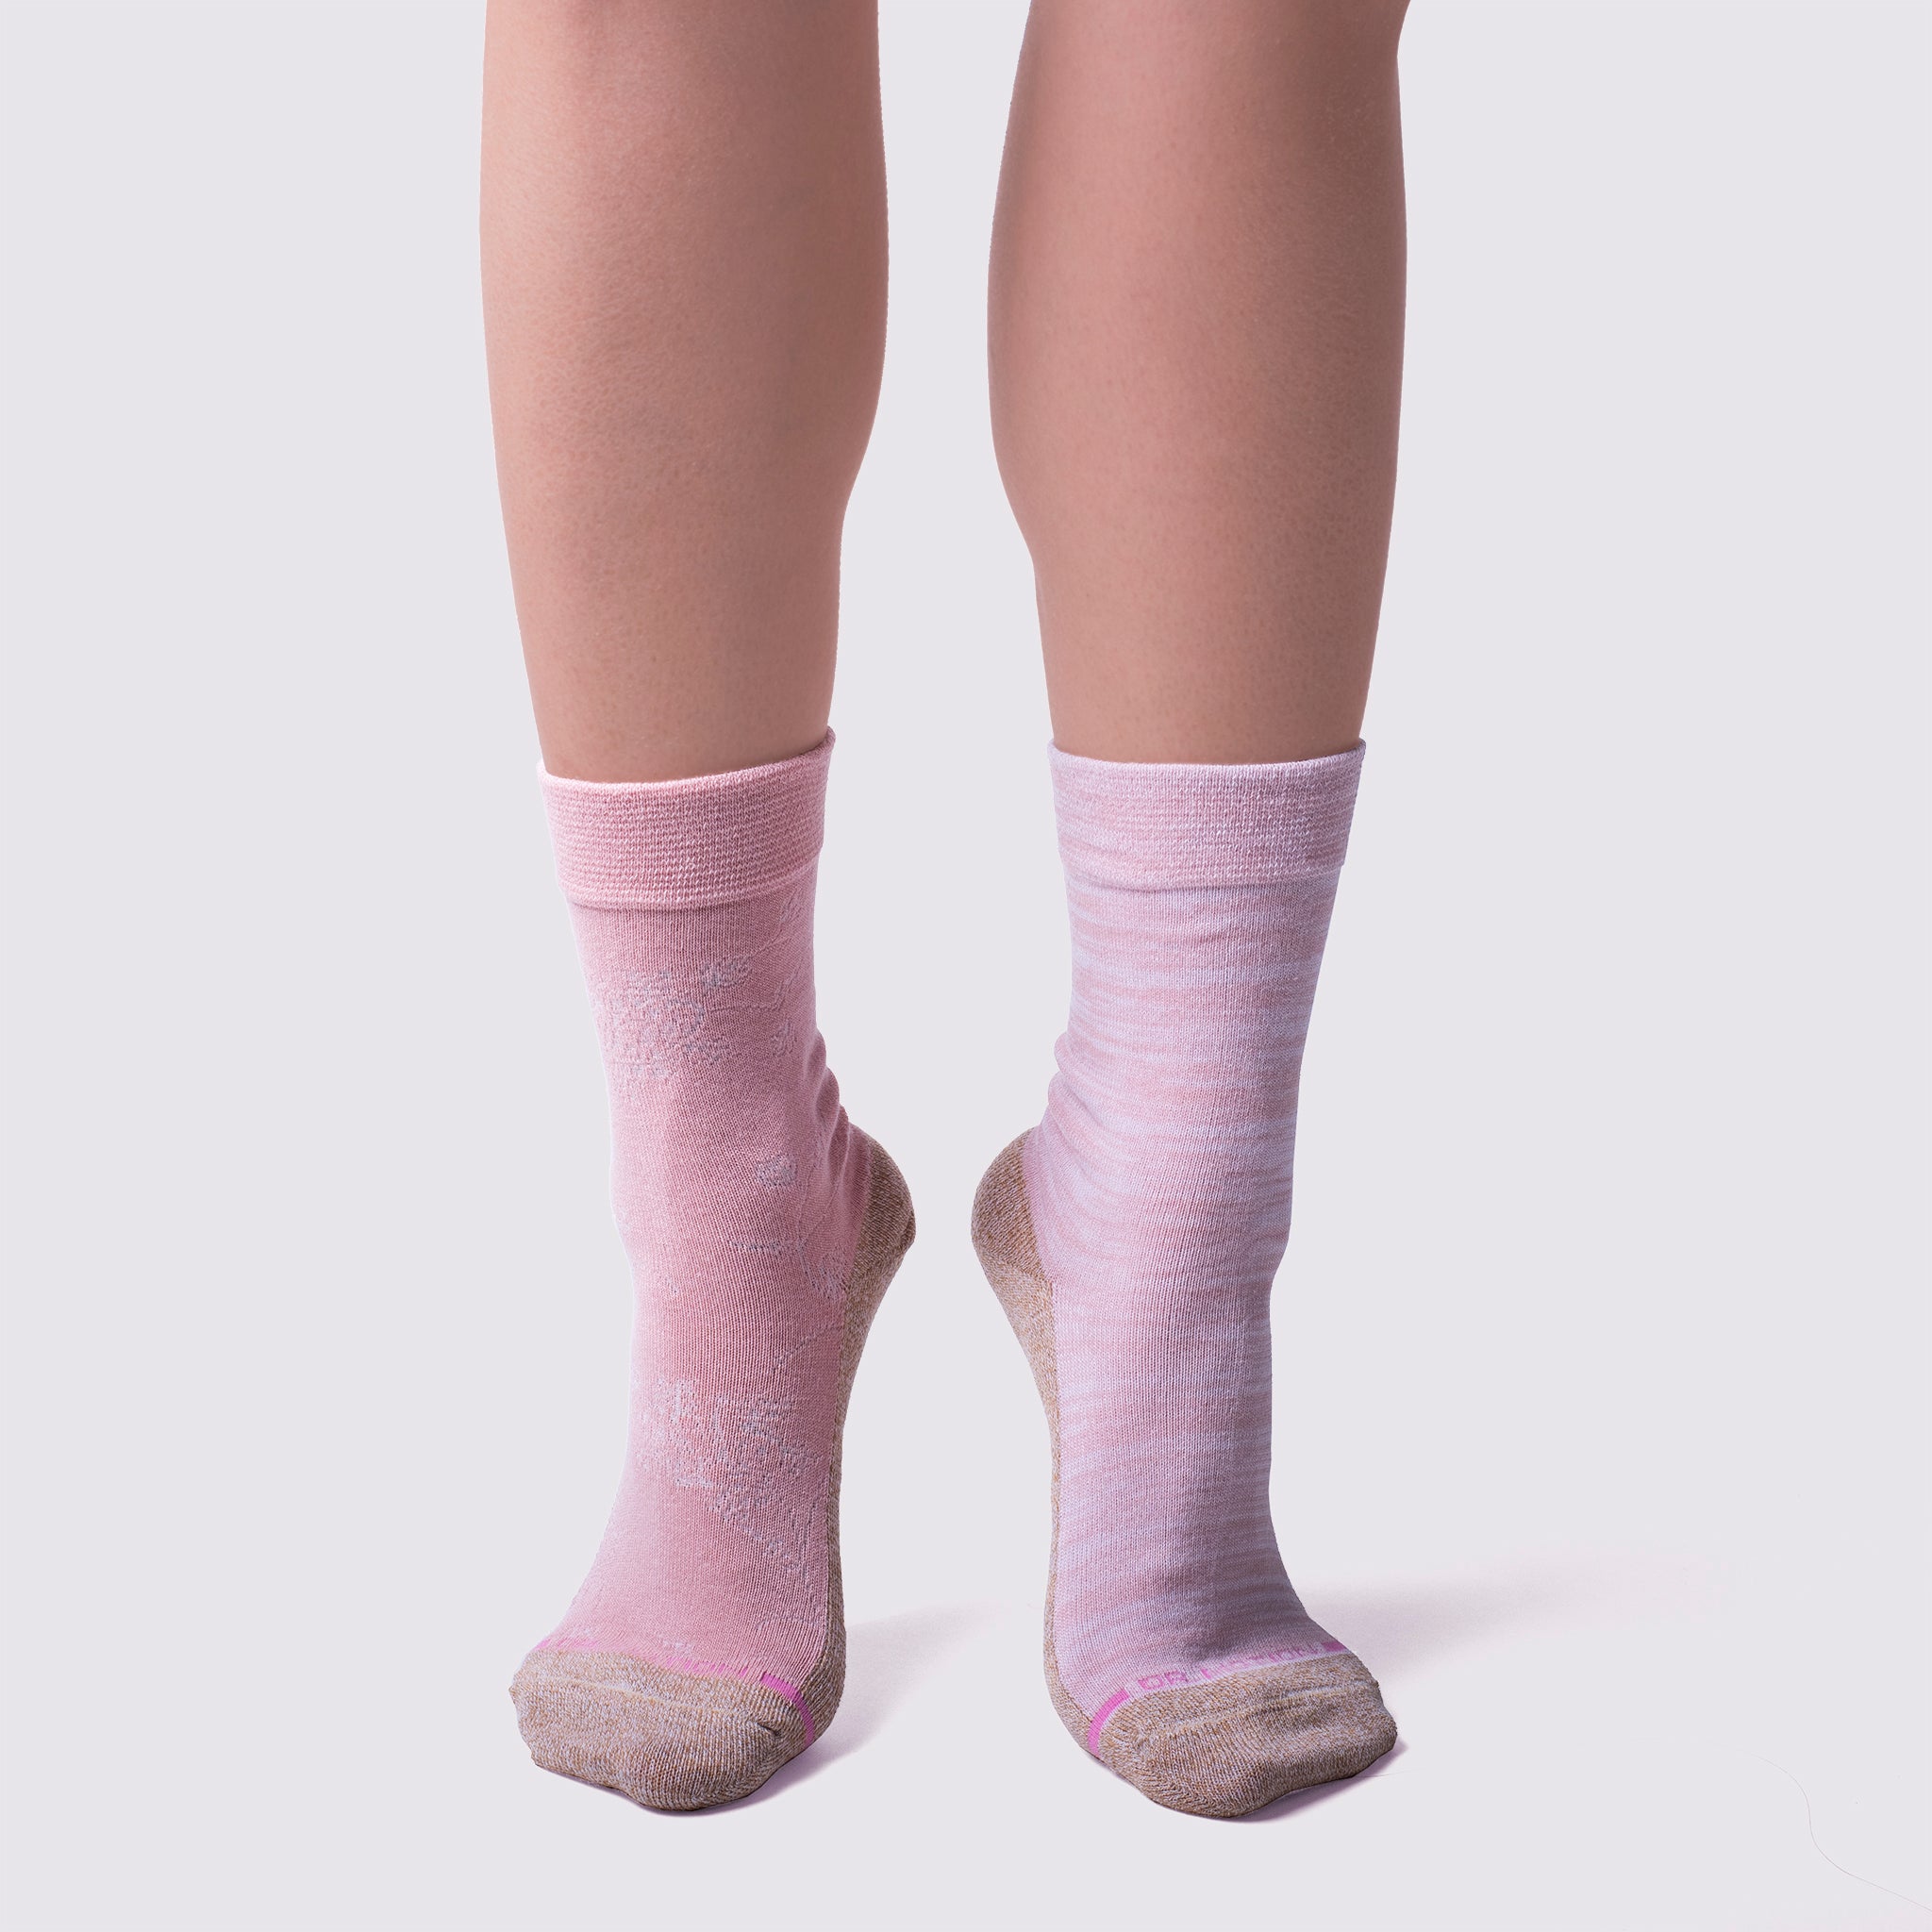 Floral | Comfort Top Socks For Women